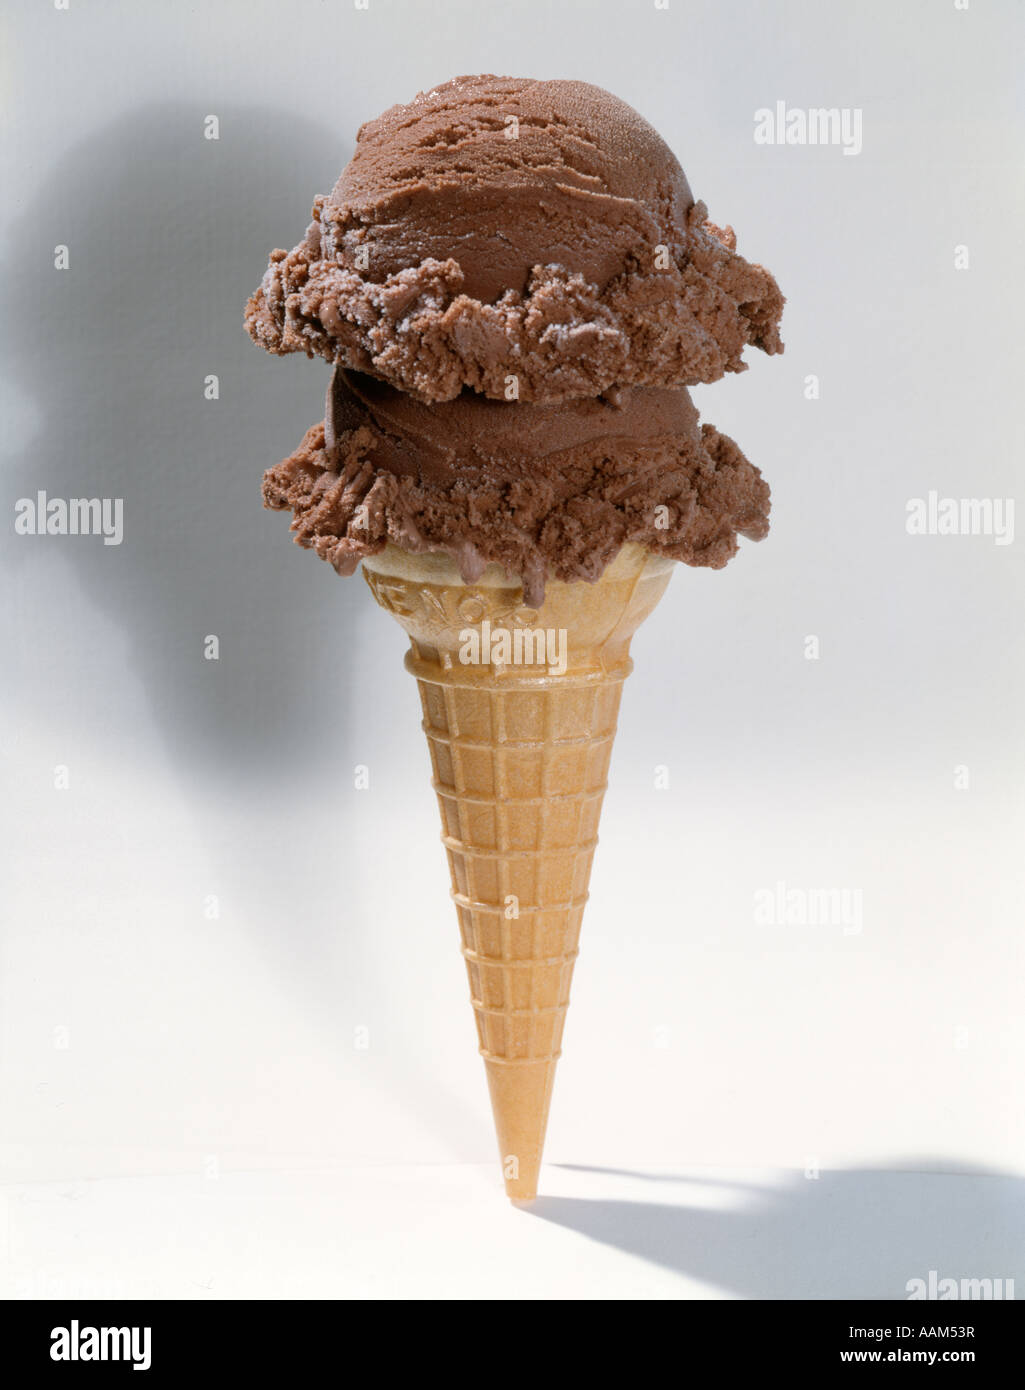 TWO SCOOPS CHOCOLATE ICE CREAM CONE Stock Photo